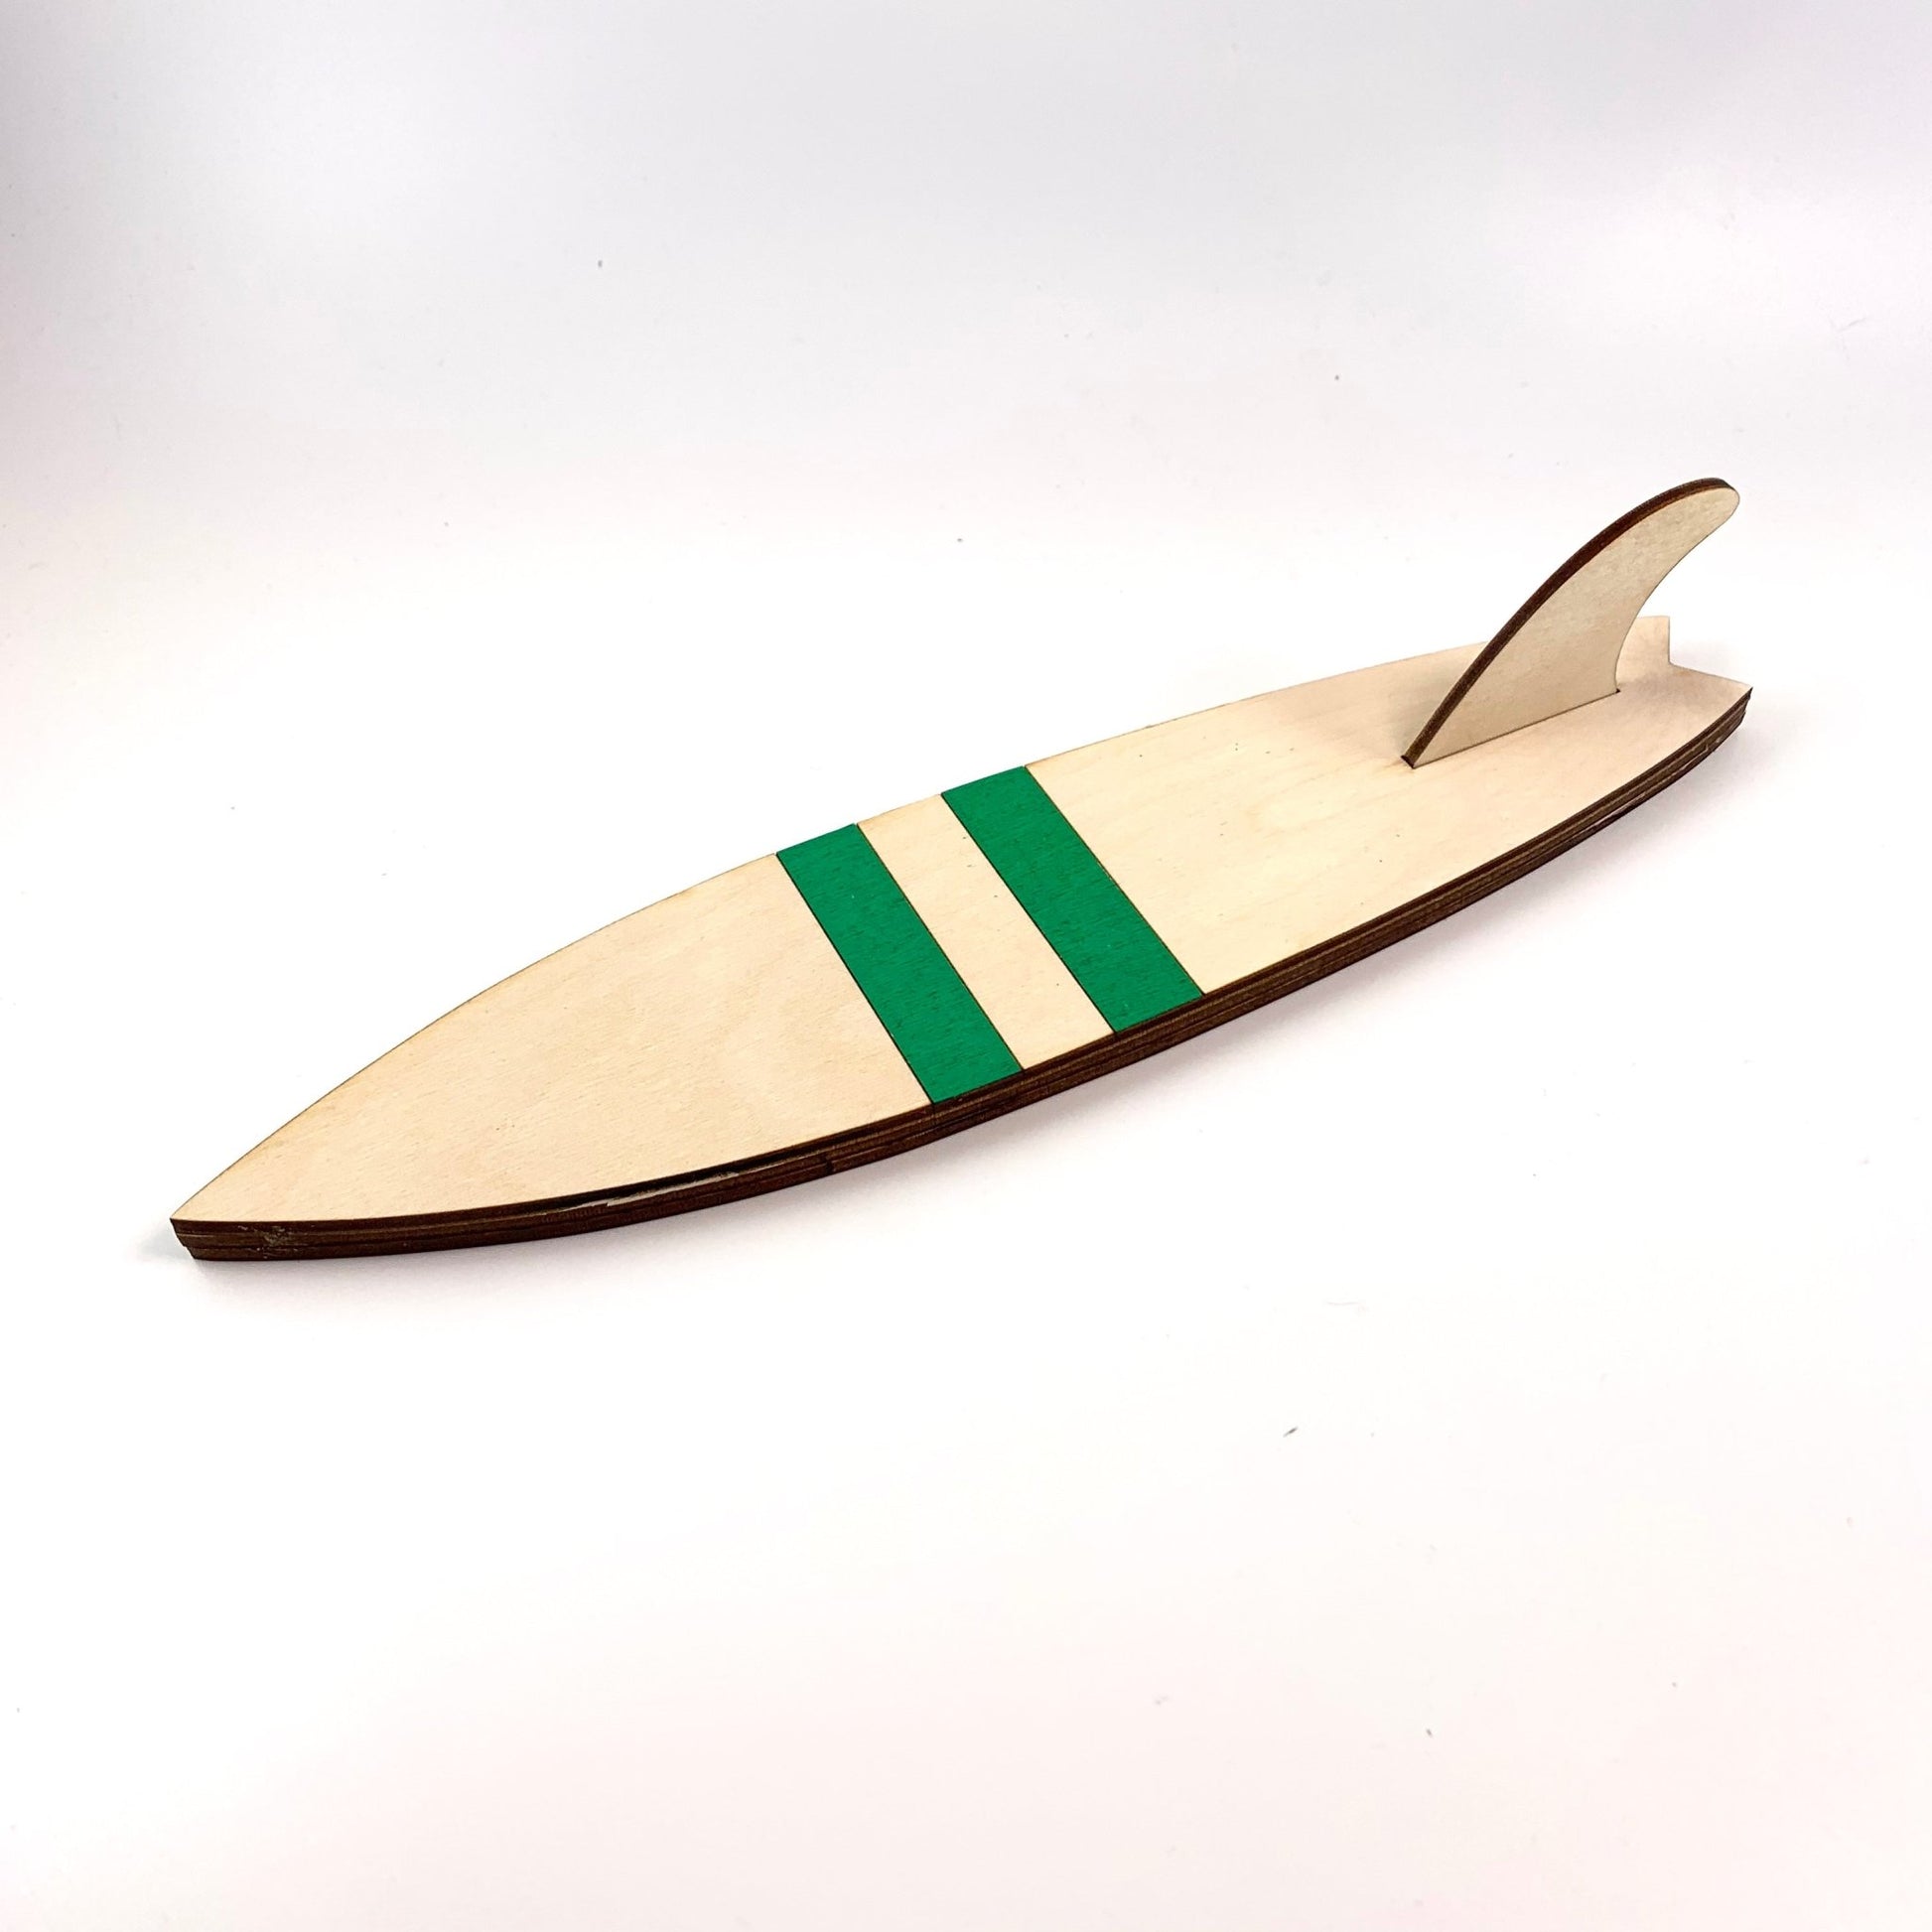 Surfboard Hooks - laser cut and laser engraved birch wood - green horizontal stripes - by LeeMo Designs in Bend, Oregon